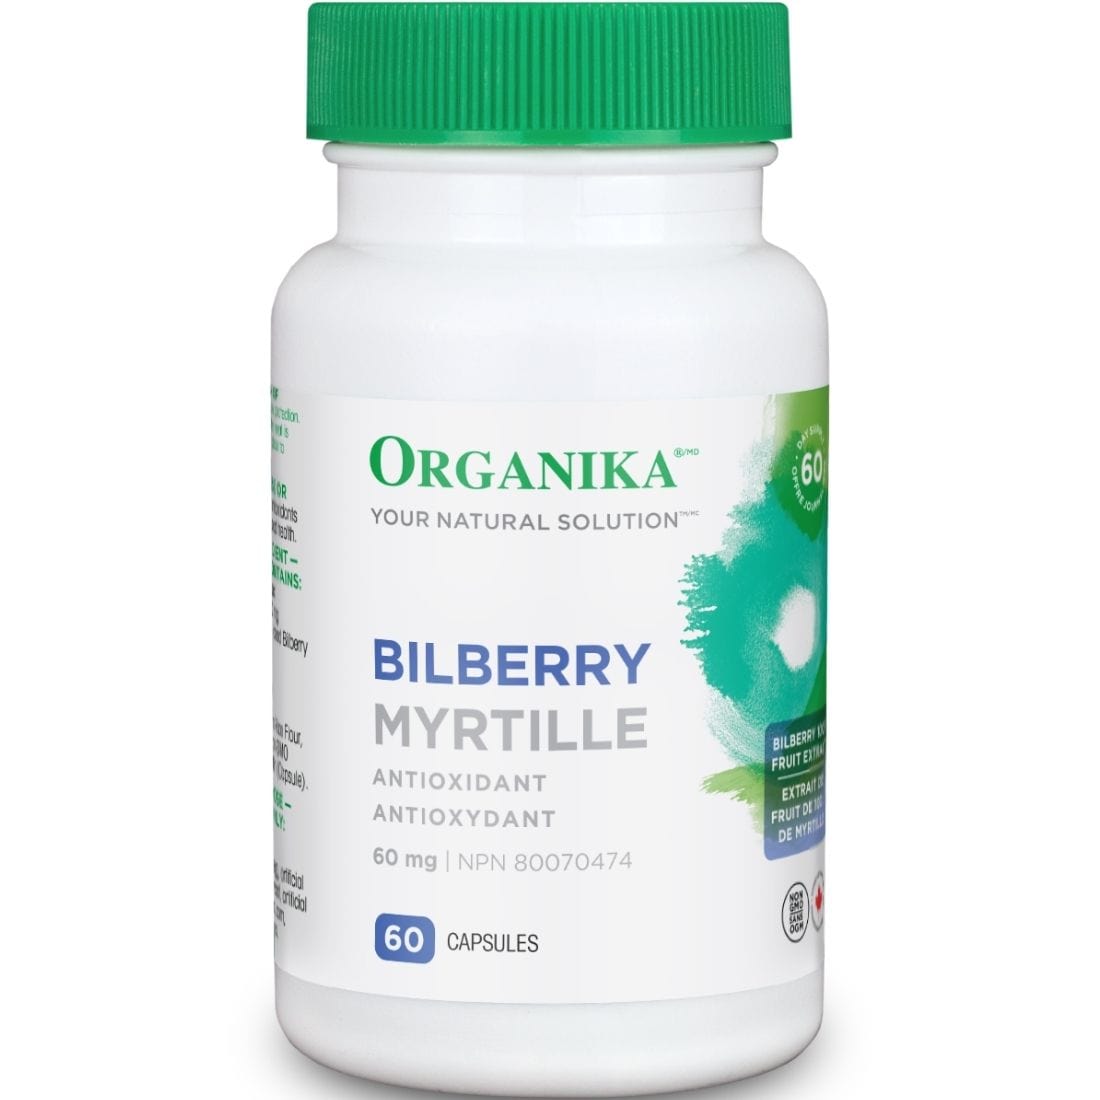 Organika Bilberry Extract, 60mg